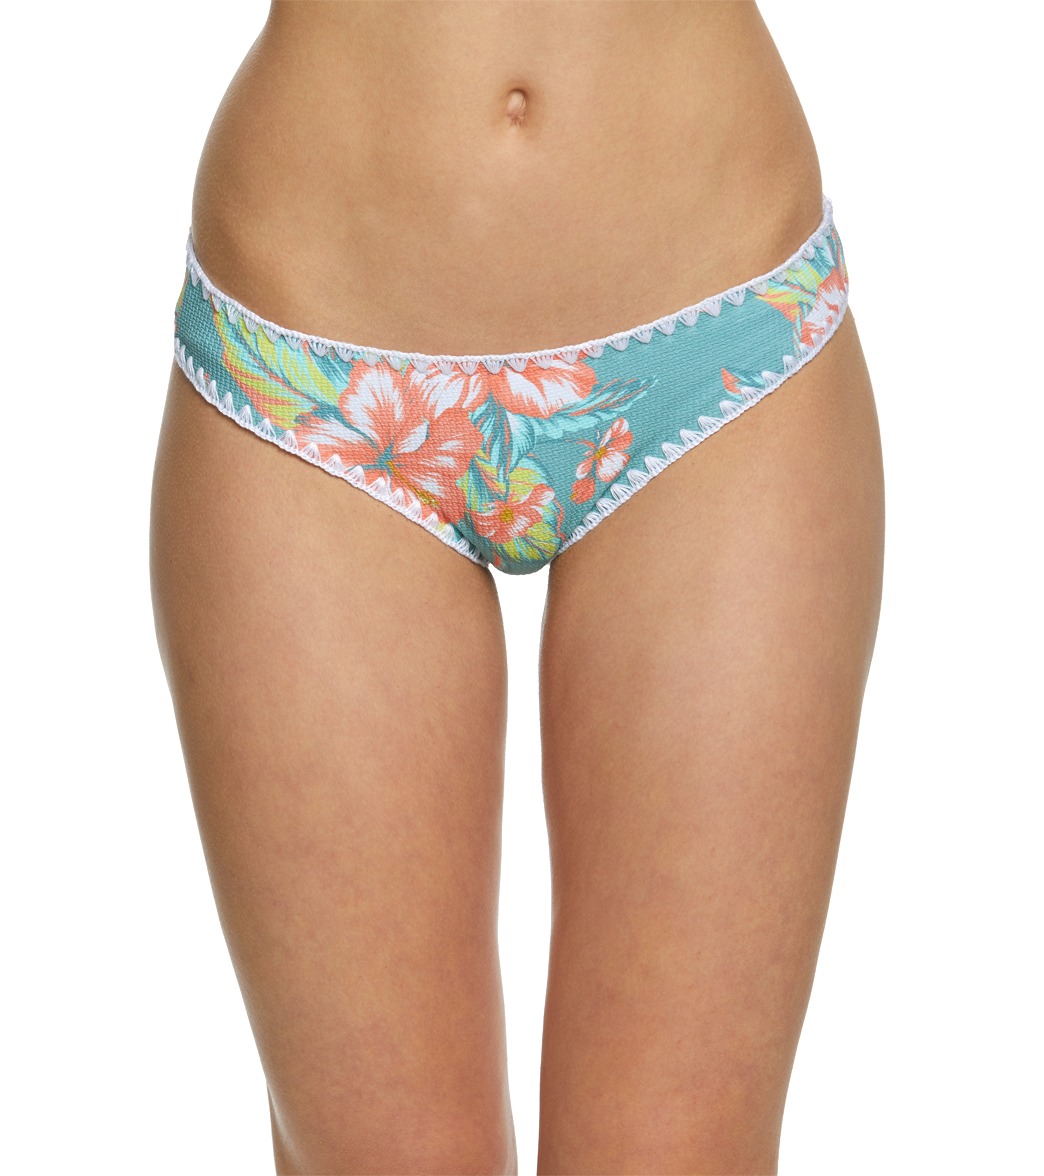 Raisins Gold Coast Lowrider Bikini Bottom - Safari Large - Swimoutlet.com